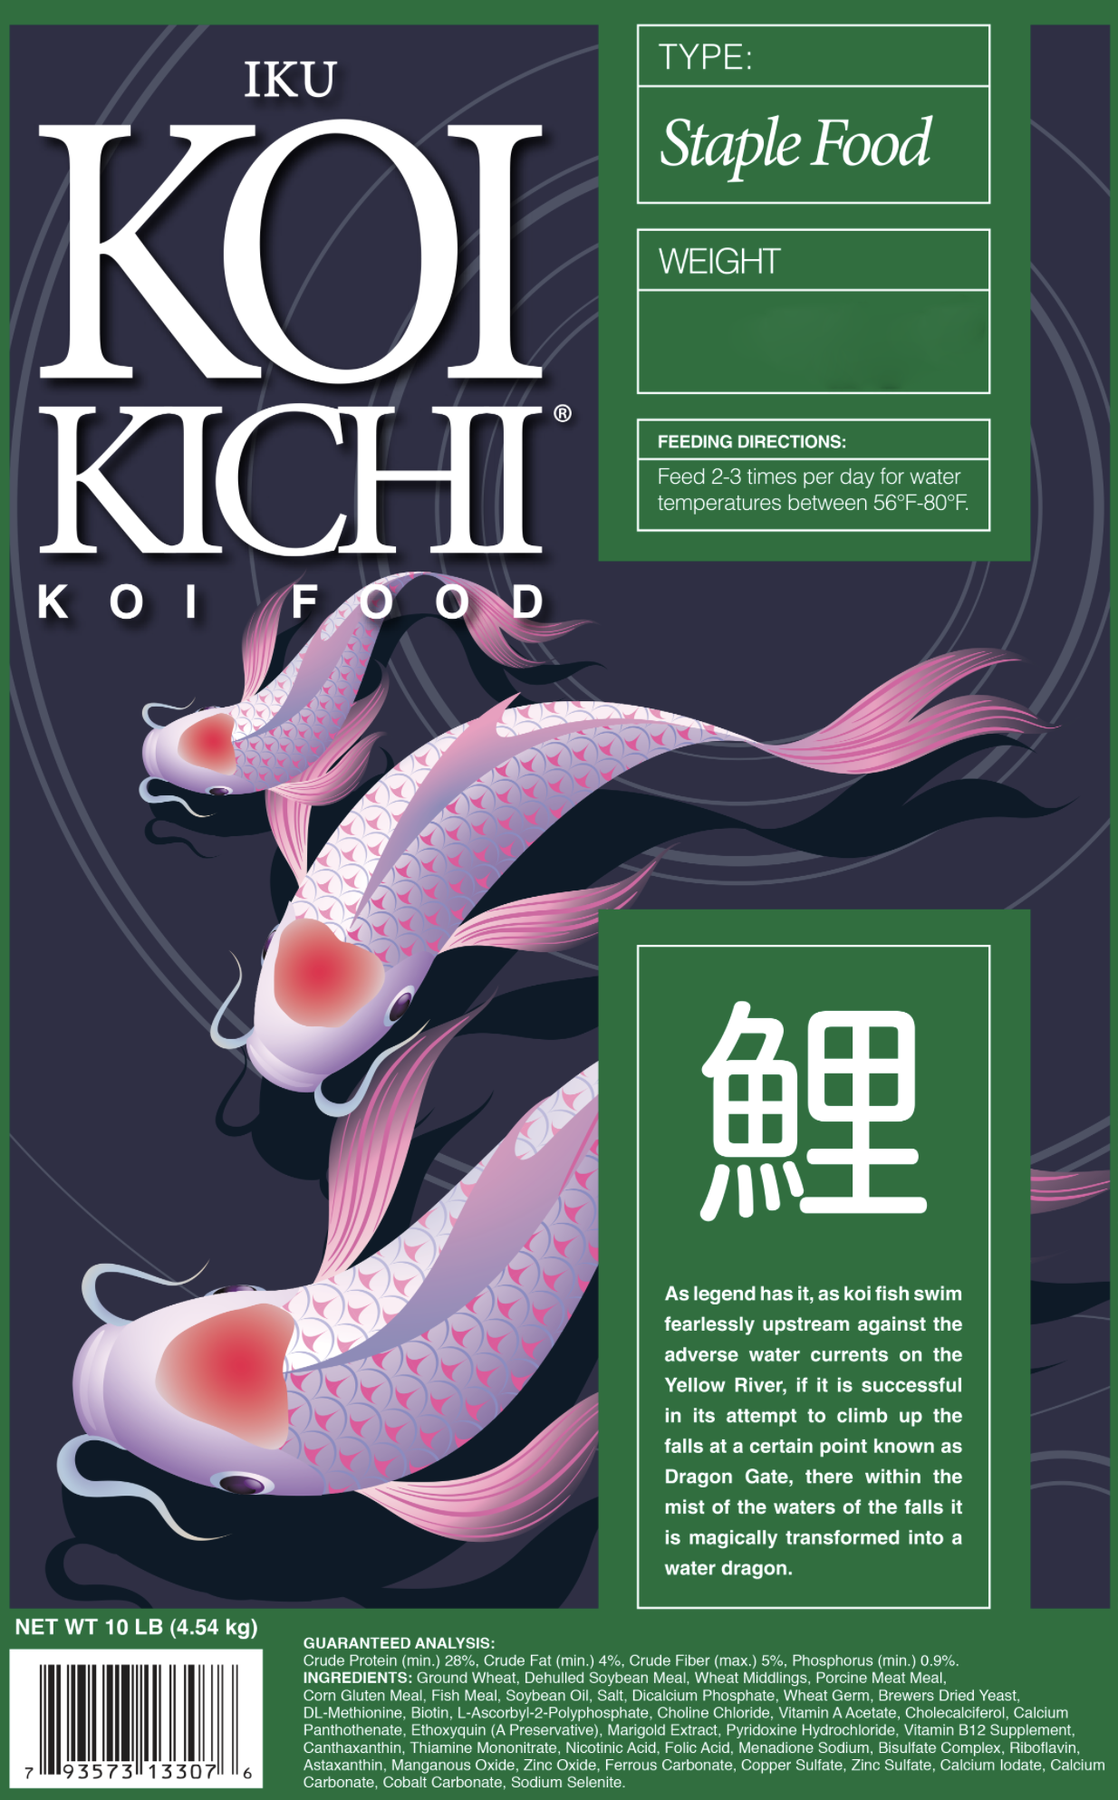 Iku Koi Kichi Staple Koi Fish Food - 20 lbs.